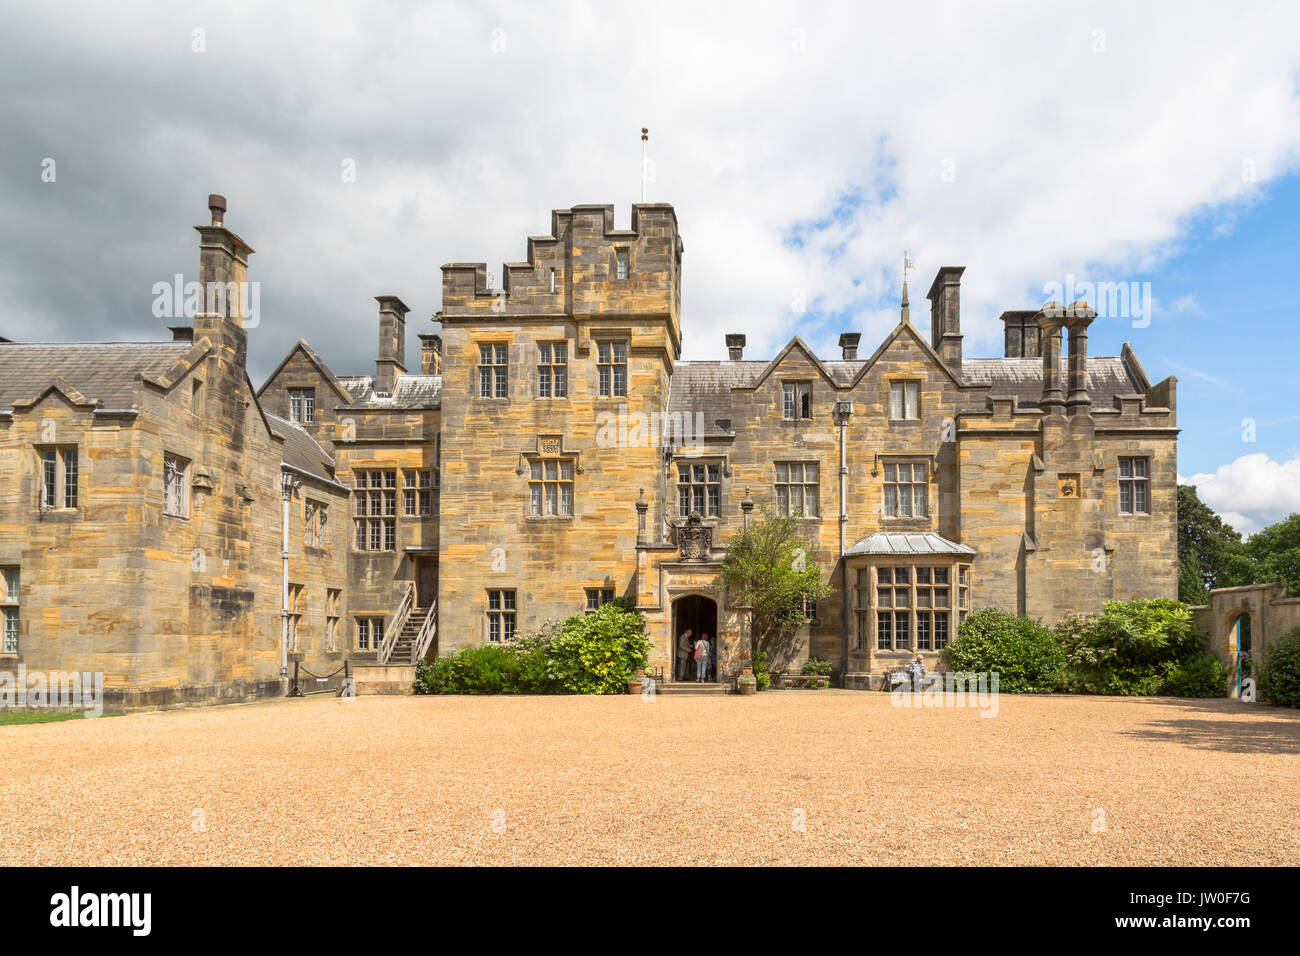 Scotney Castle dating from 1837, built in Elizabethan style, Lamberhurst, Kent, United Kingdom. Stock Photo